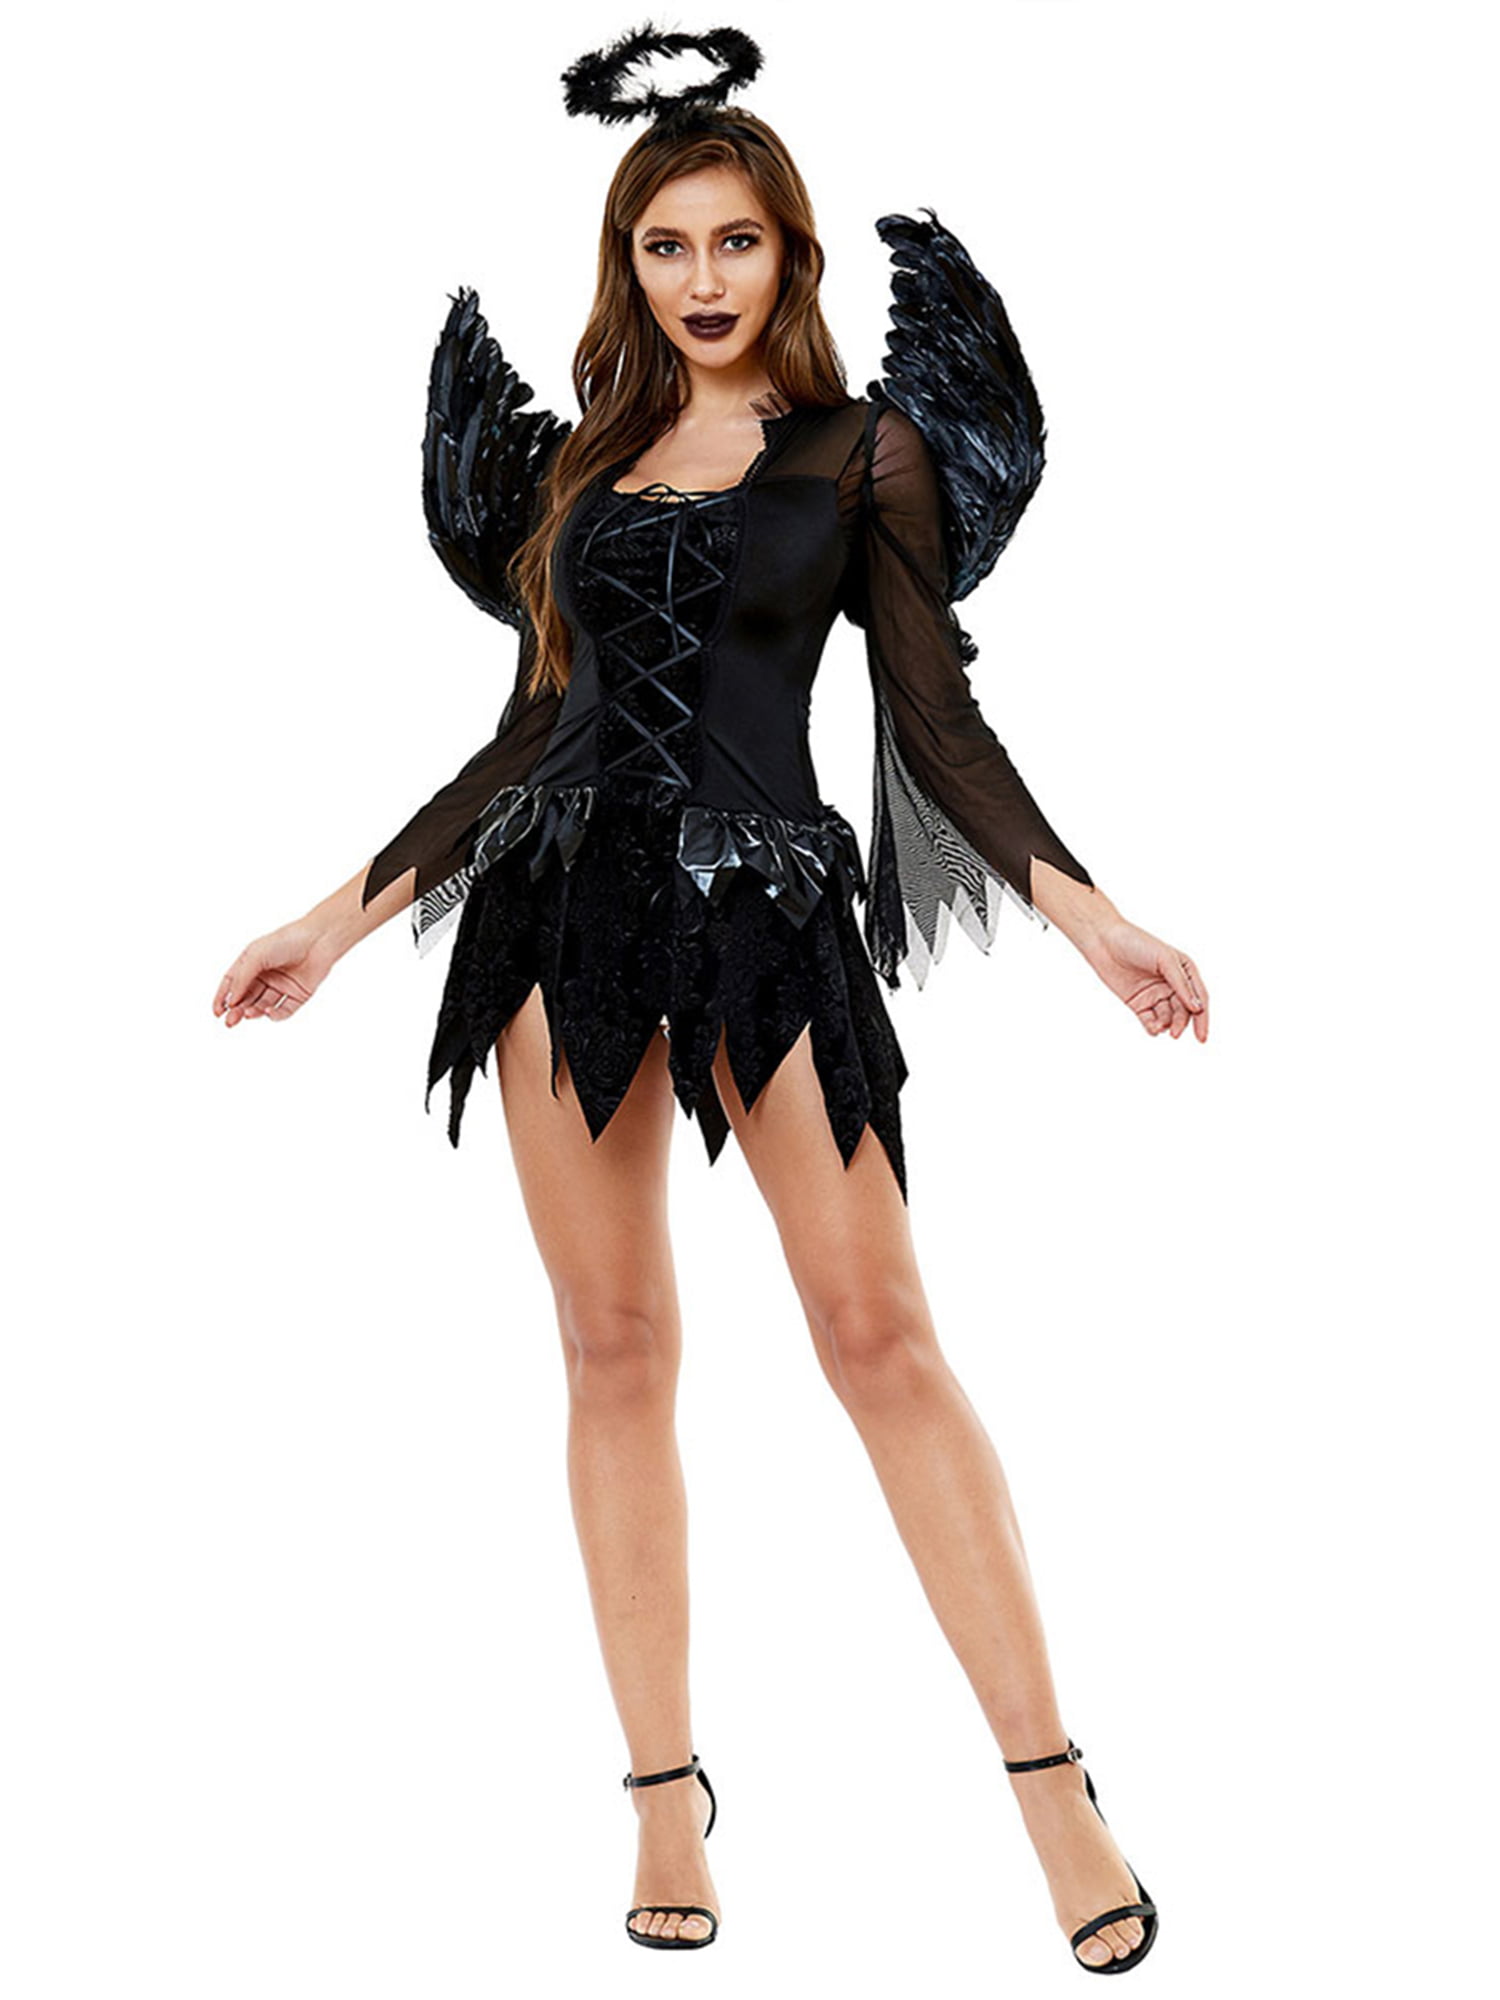 Musuos Halloween Dark Angel Costume Angel Wings Festival Dress for Women  Ghost Bride Devil Suit